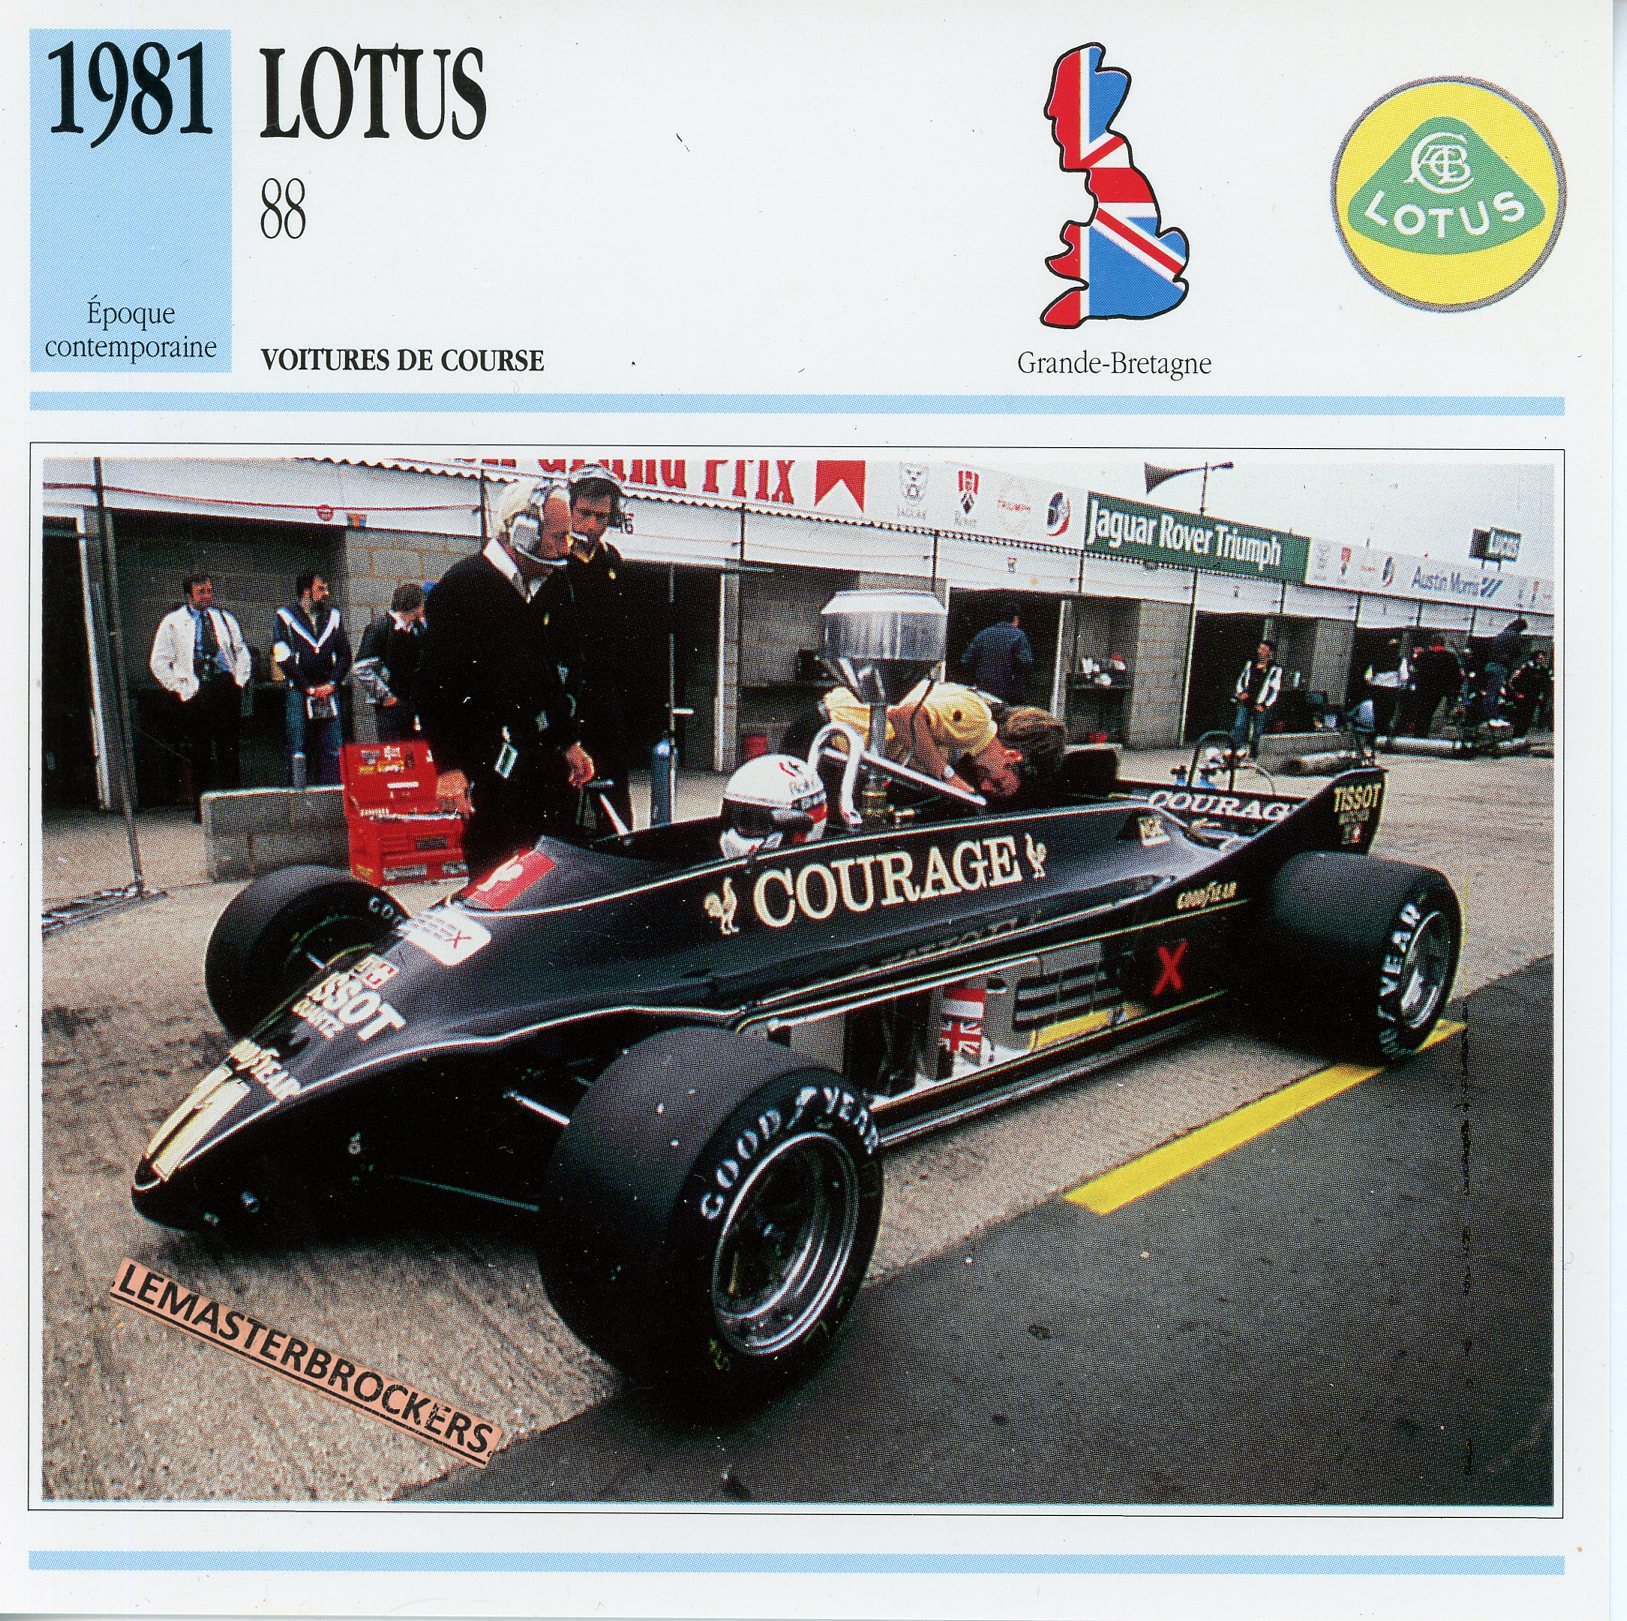 LOTUS-80-F1-1981-FICHE-AUTO-ATLAS-LEMASTERBROCKERS